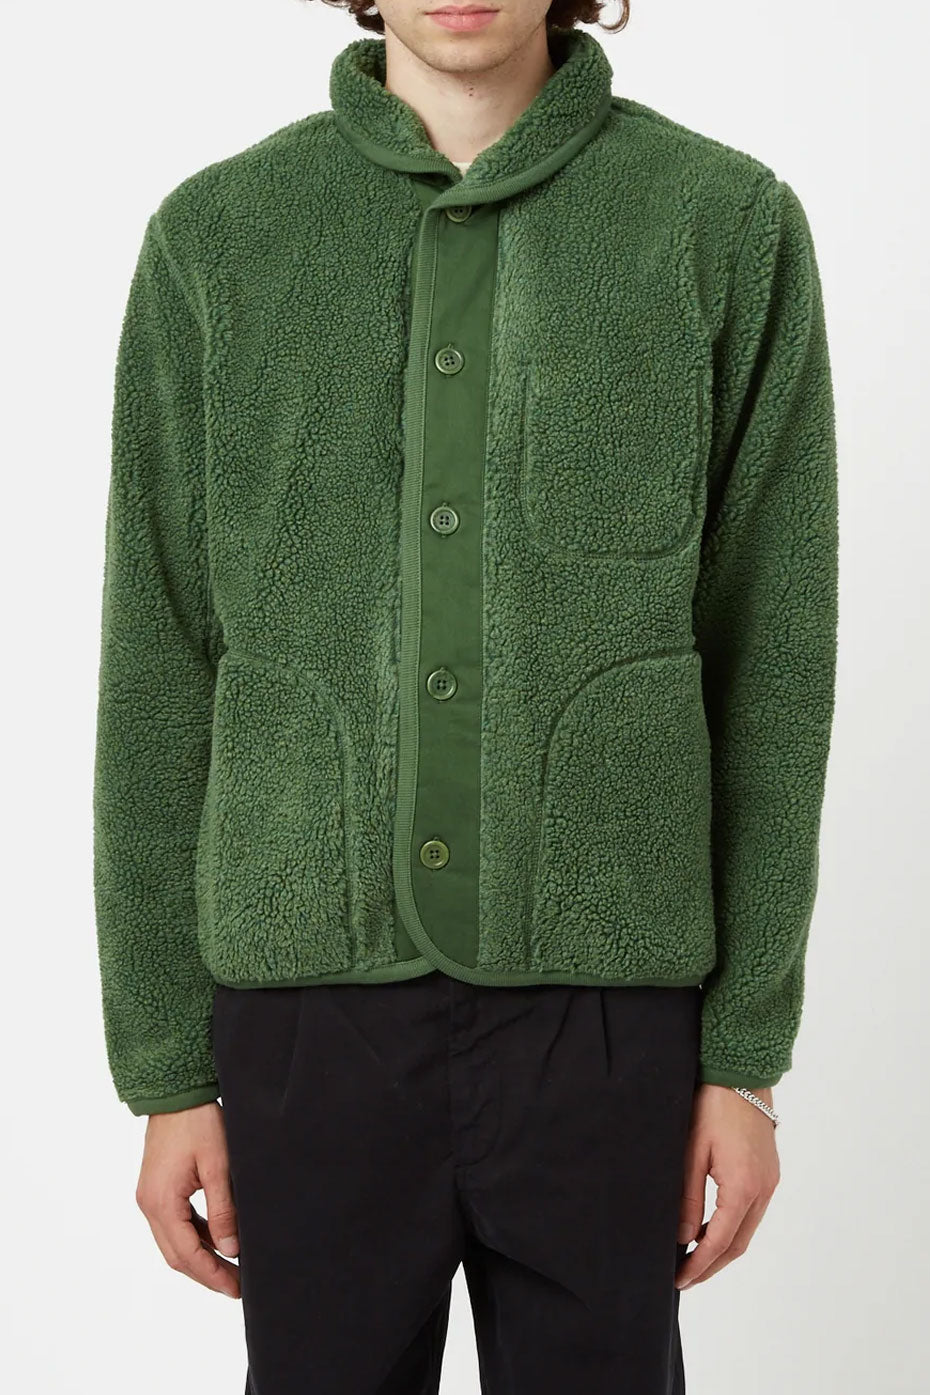 BHODE Sage Green Shawl Collar Fleece